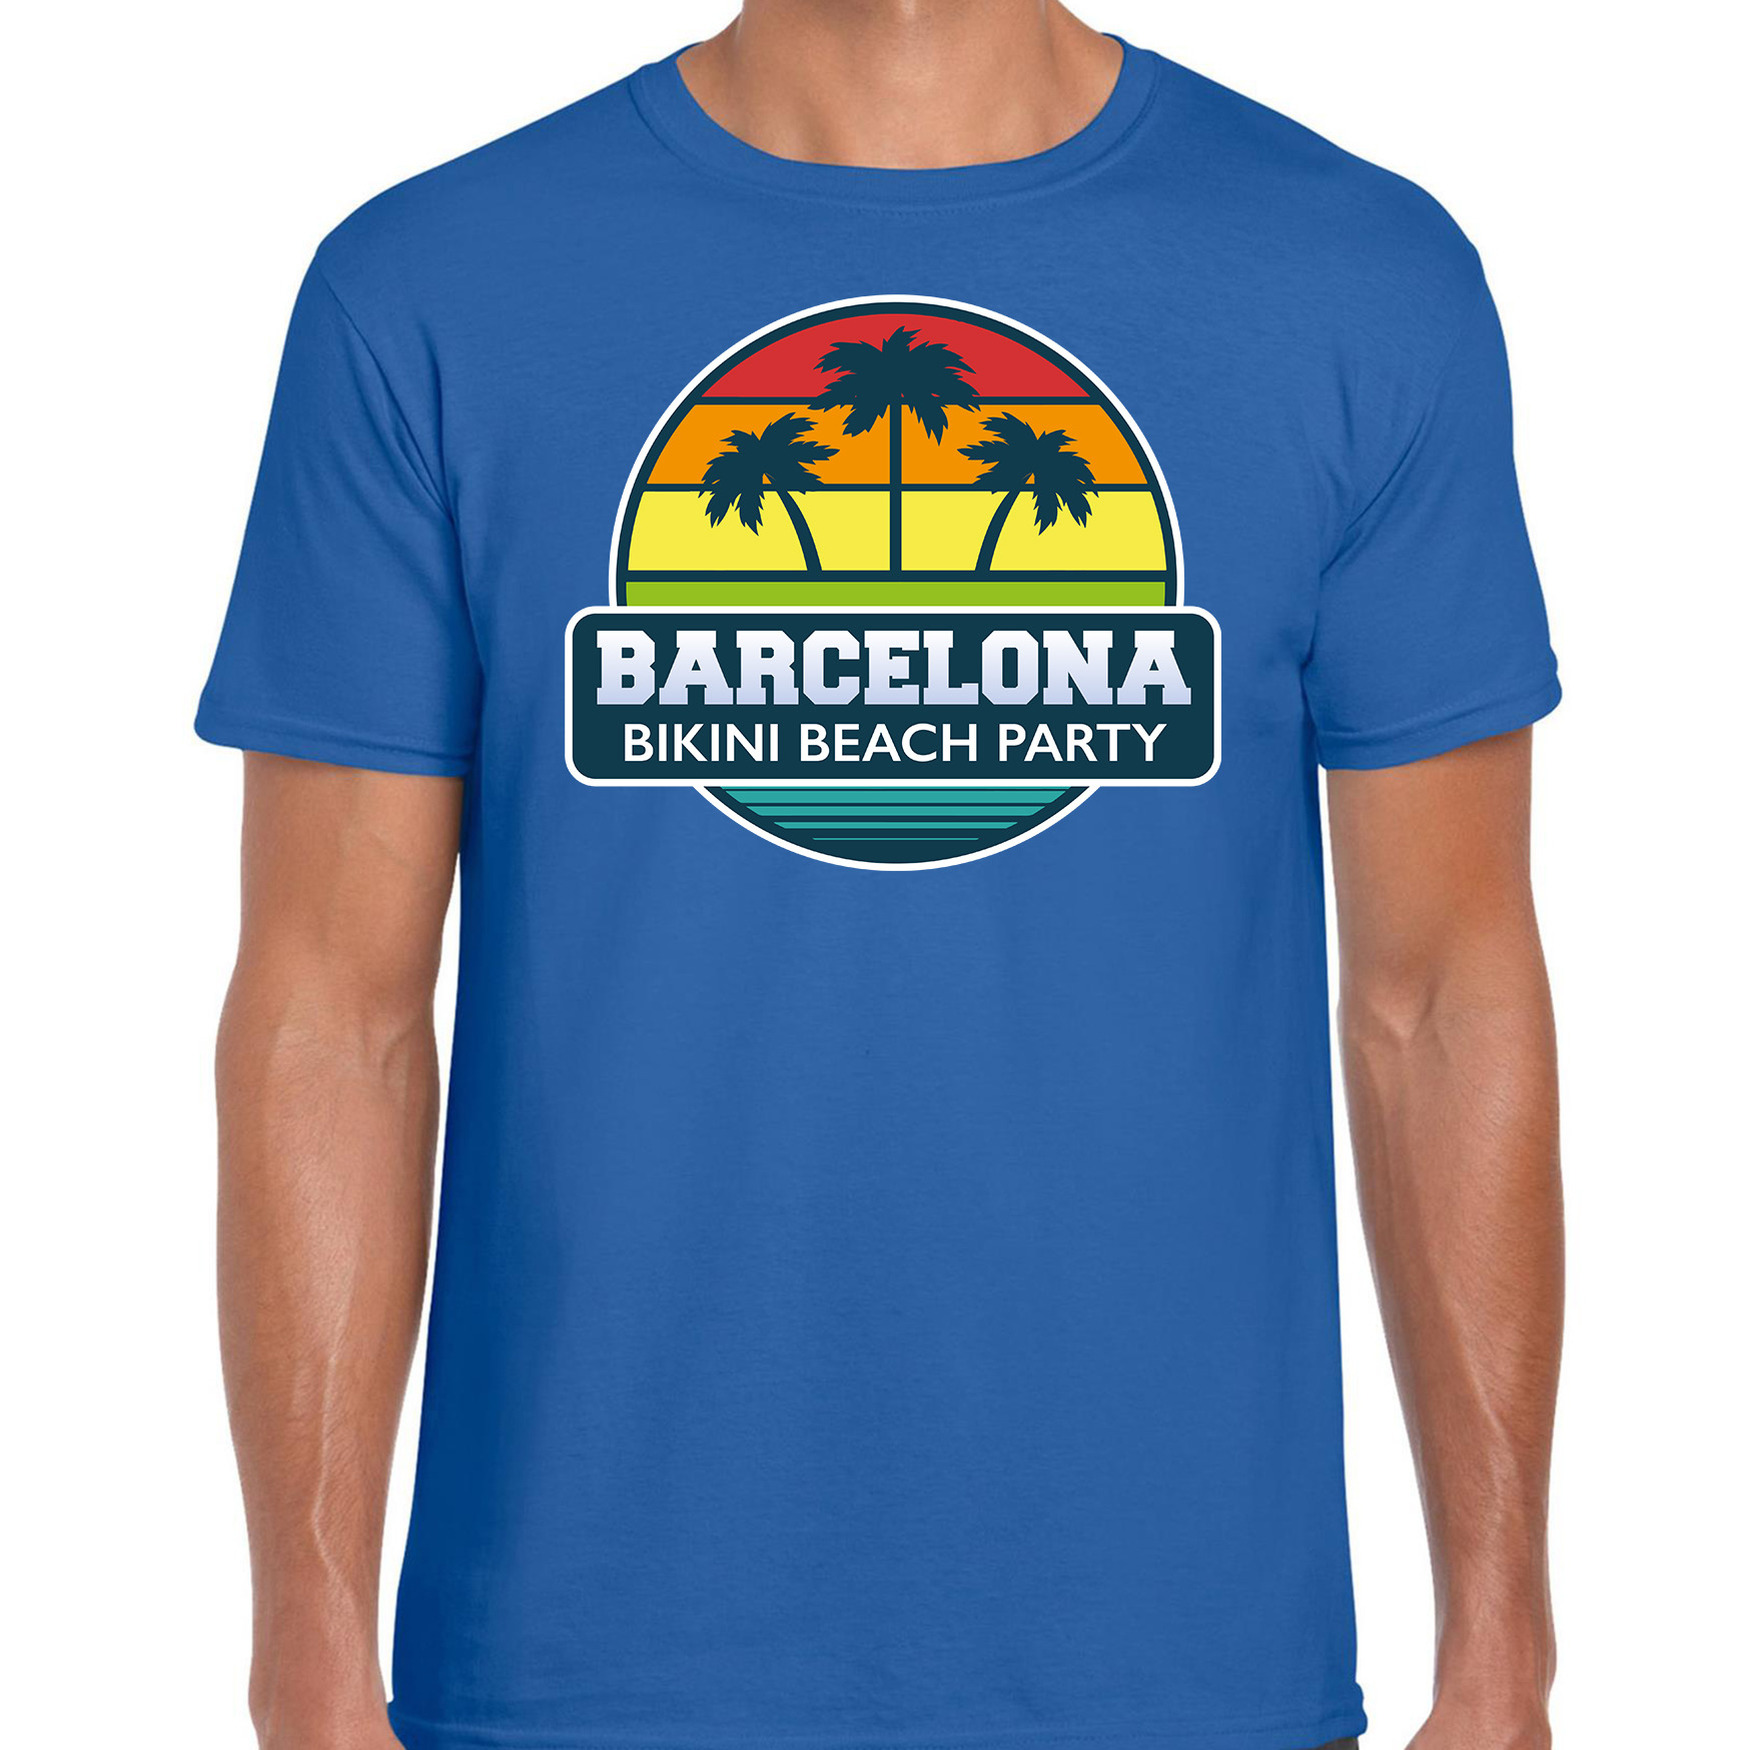 Barcelona zomer t-shirt-shirt Barcelona bikini beach party blauw voor heren